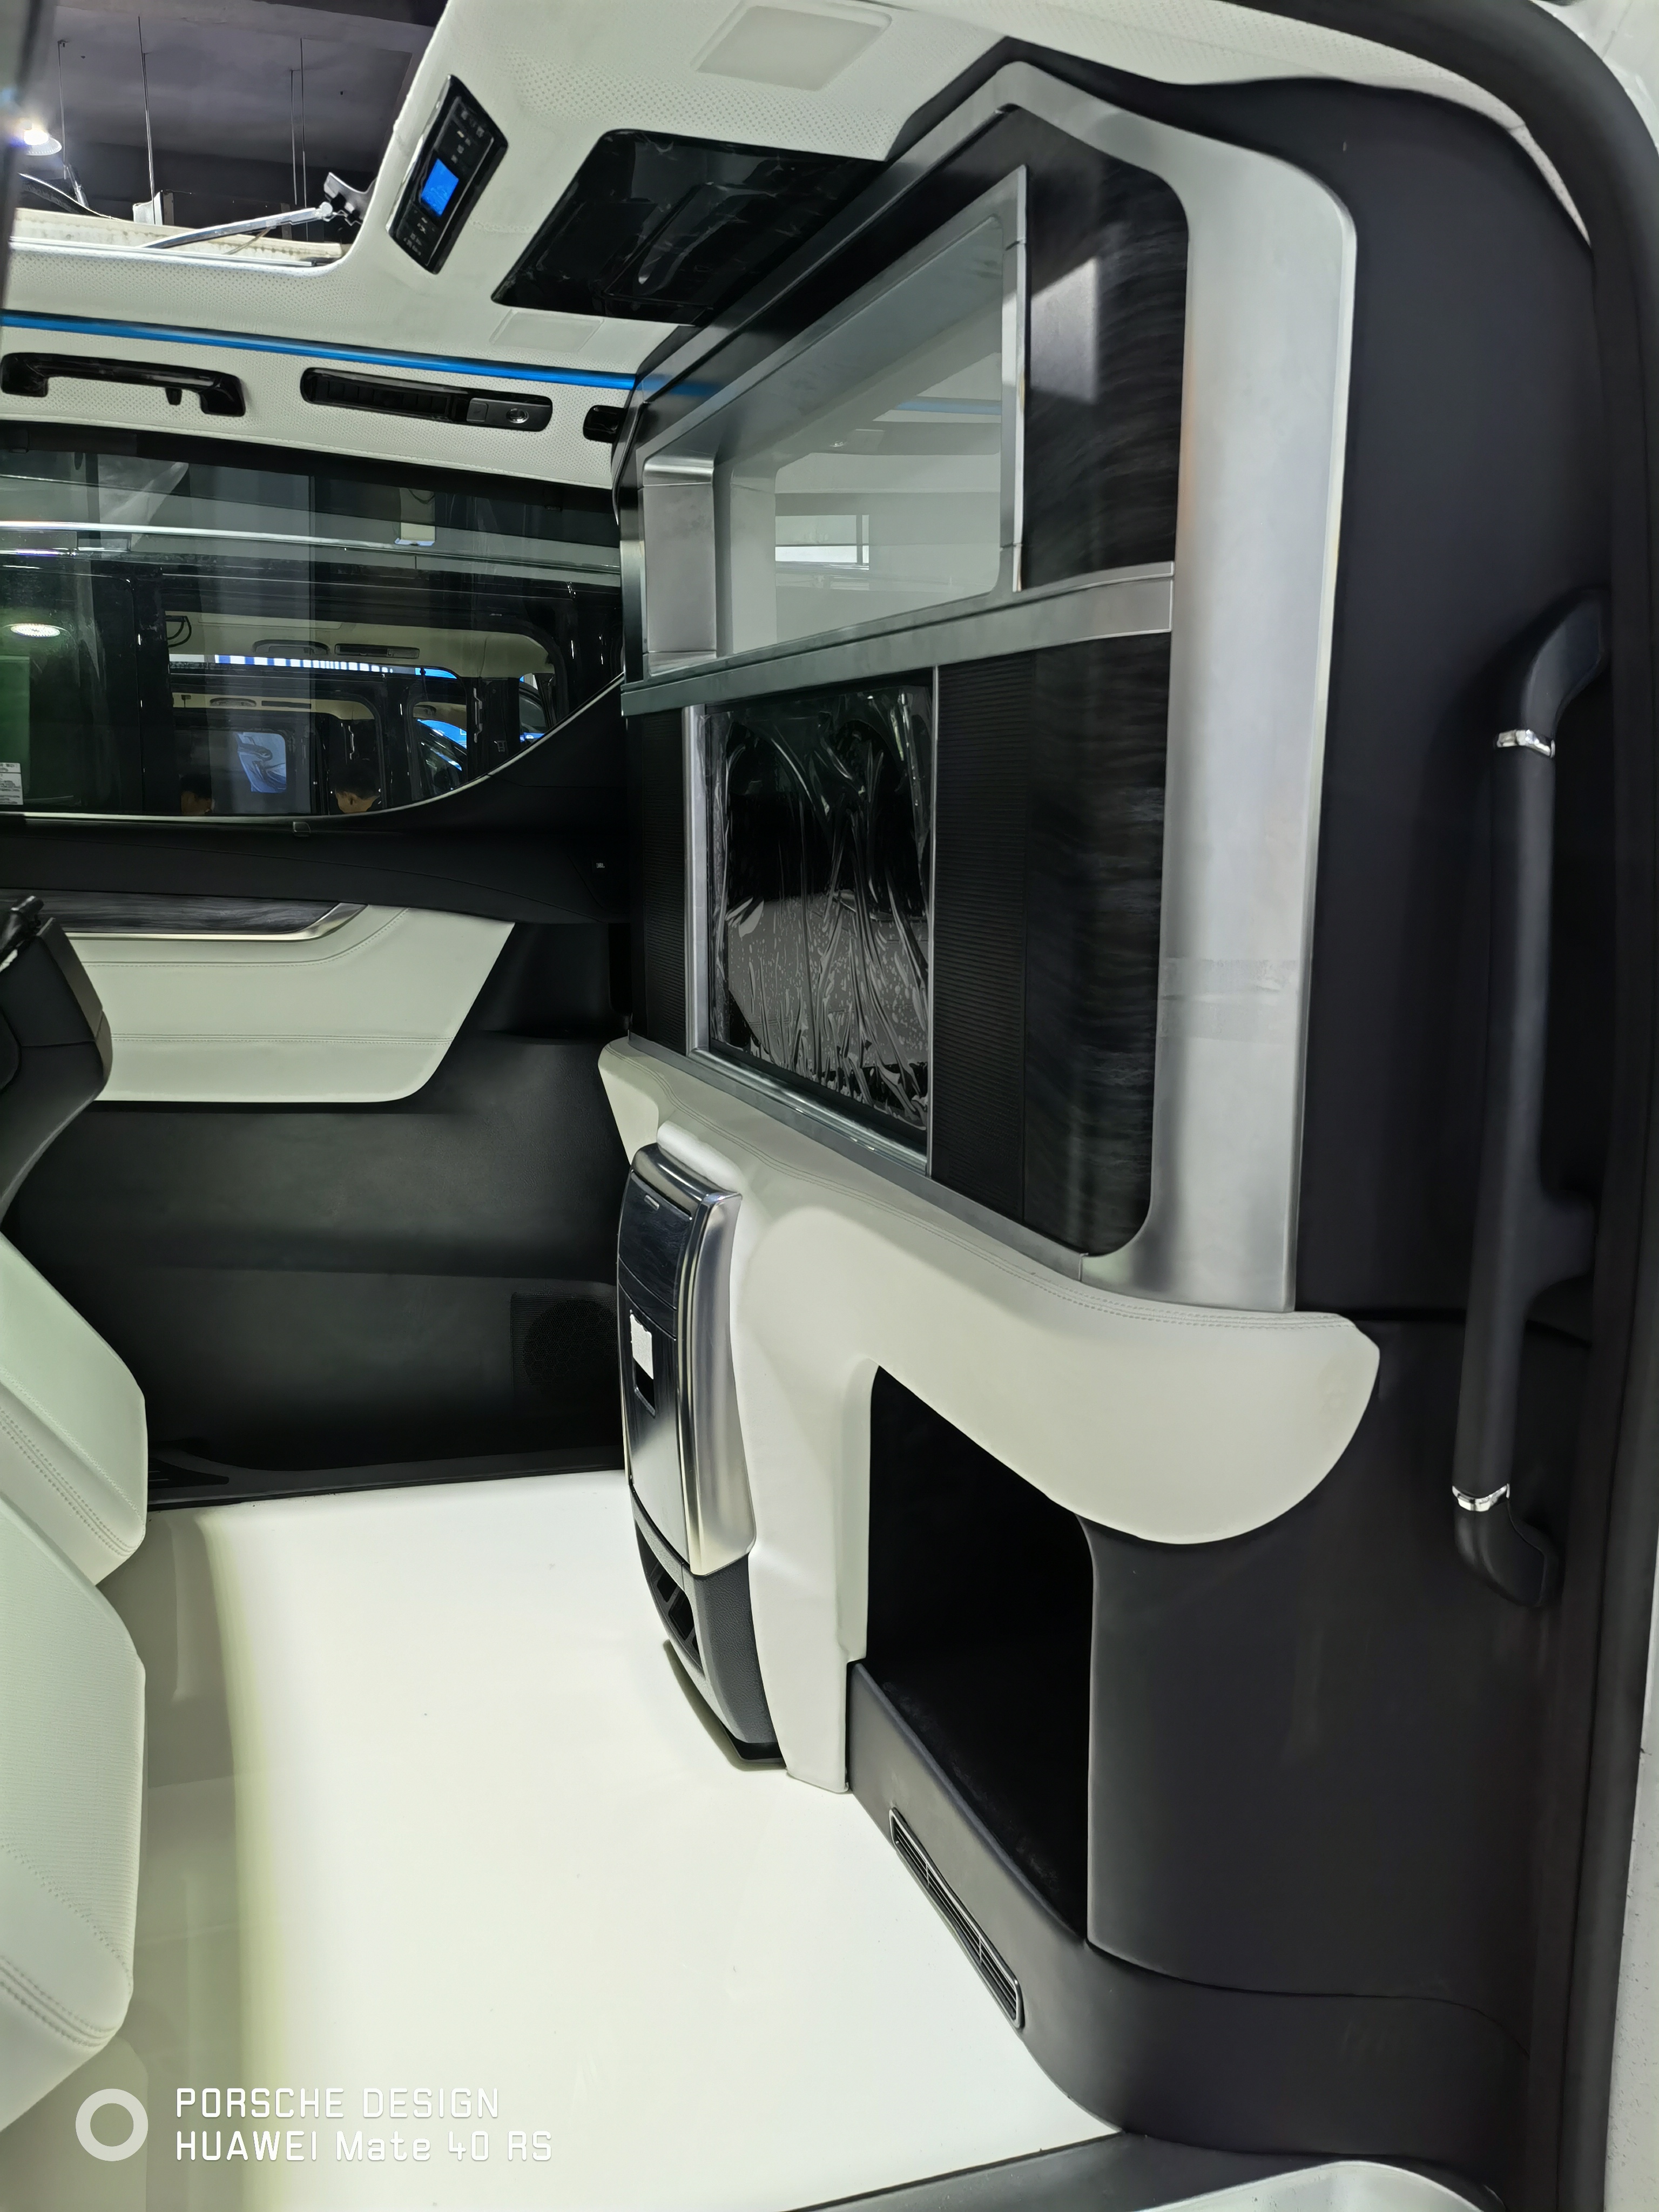 HWHongRV minibus vip car full partition with TV for limousine van